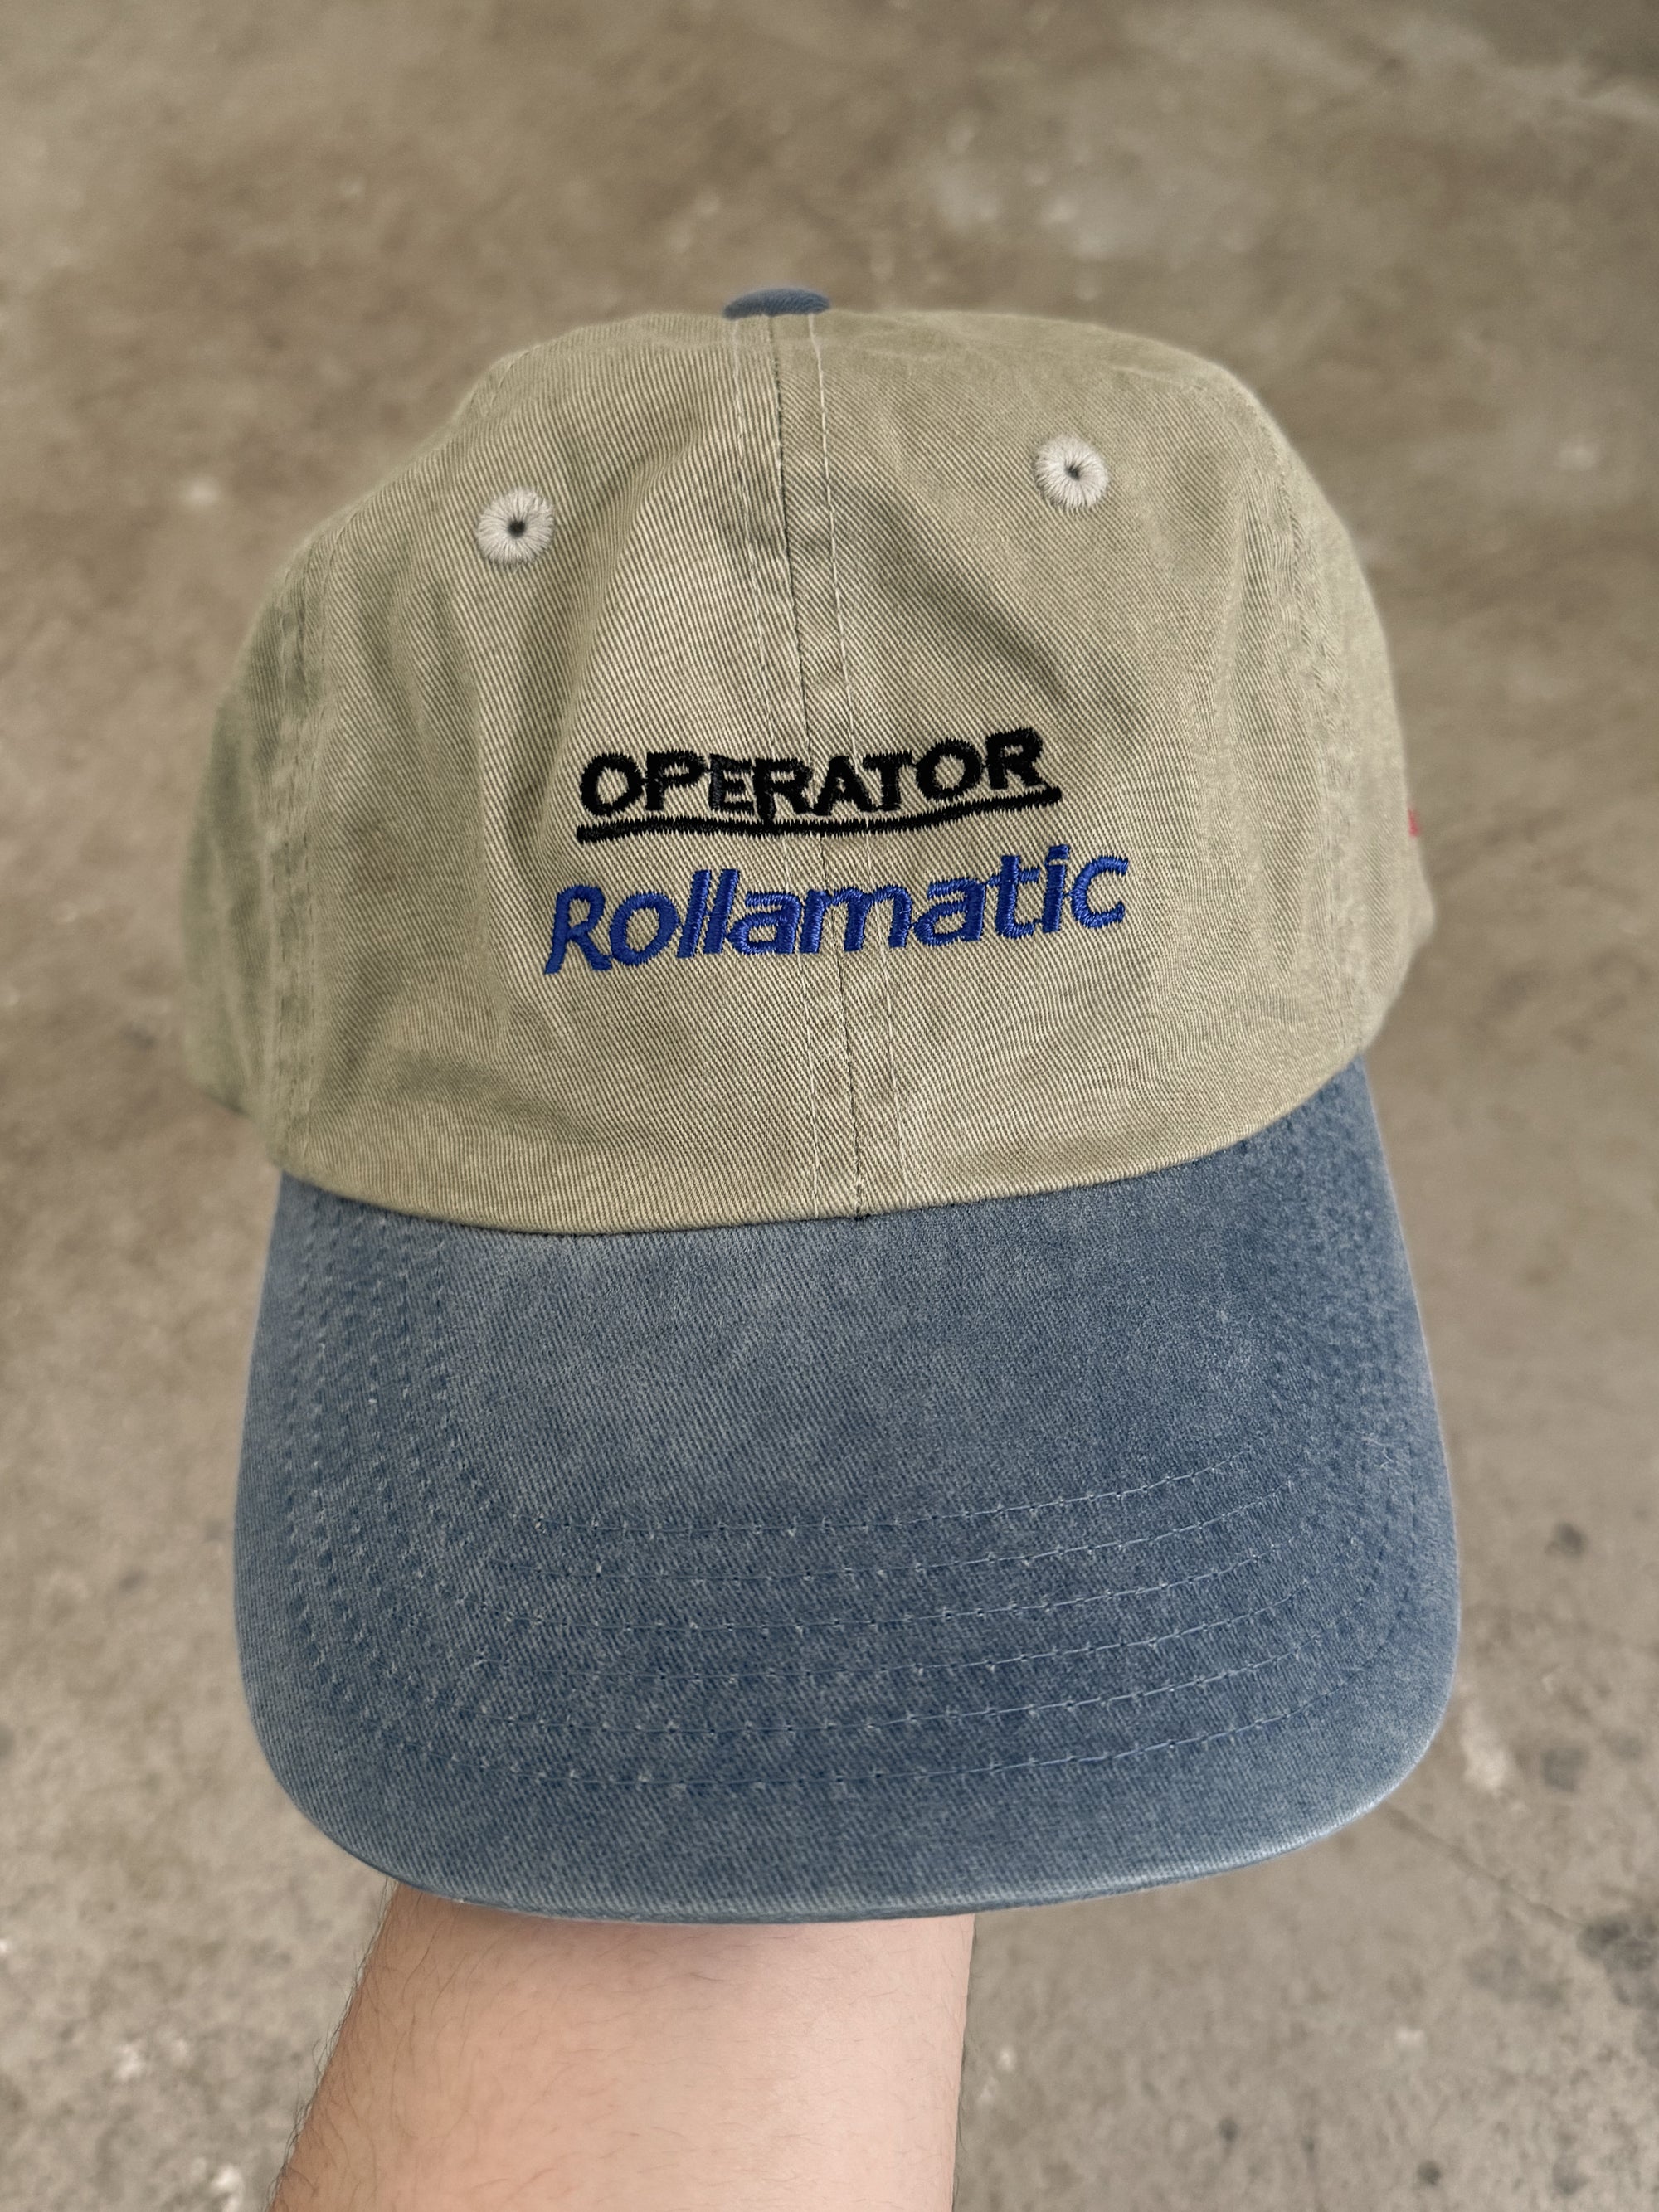 2000s "Operator Rollamatic" Hat